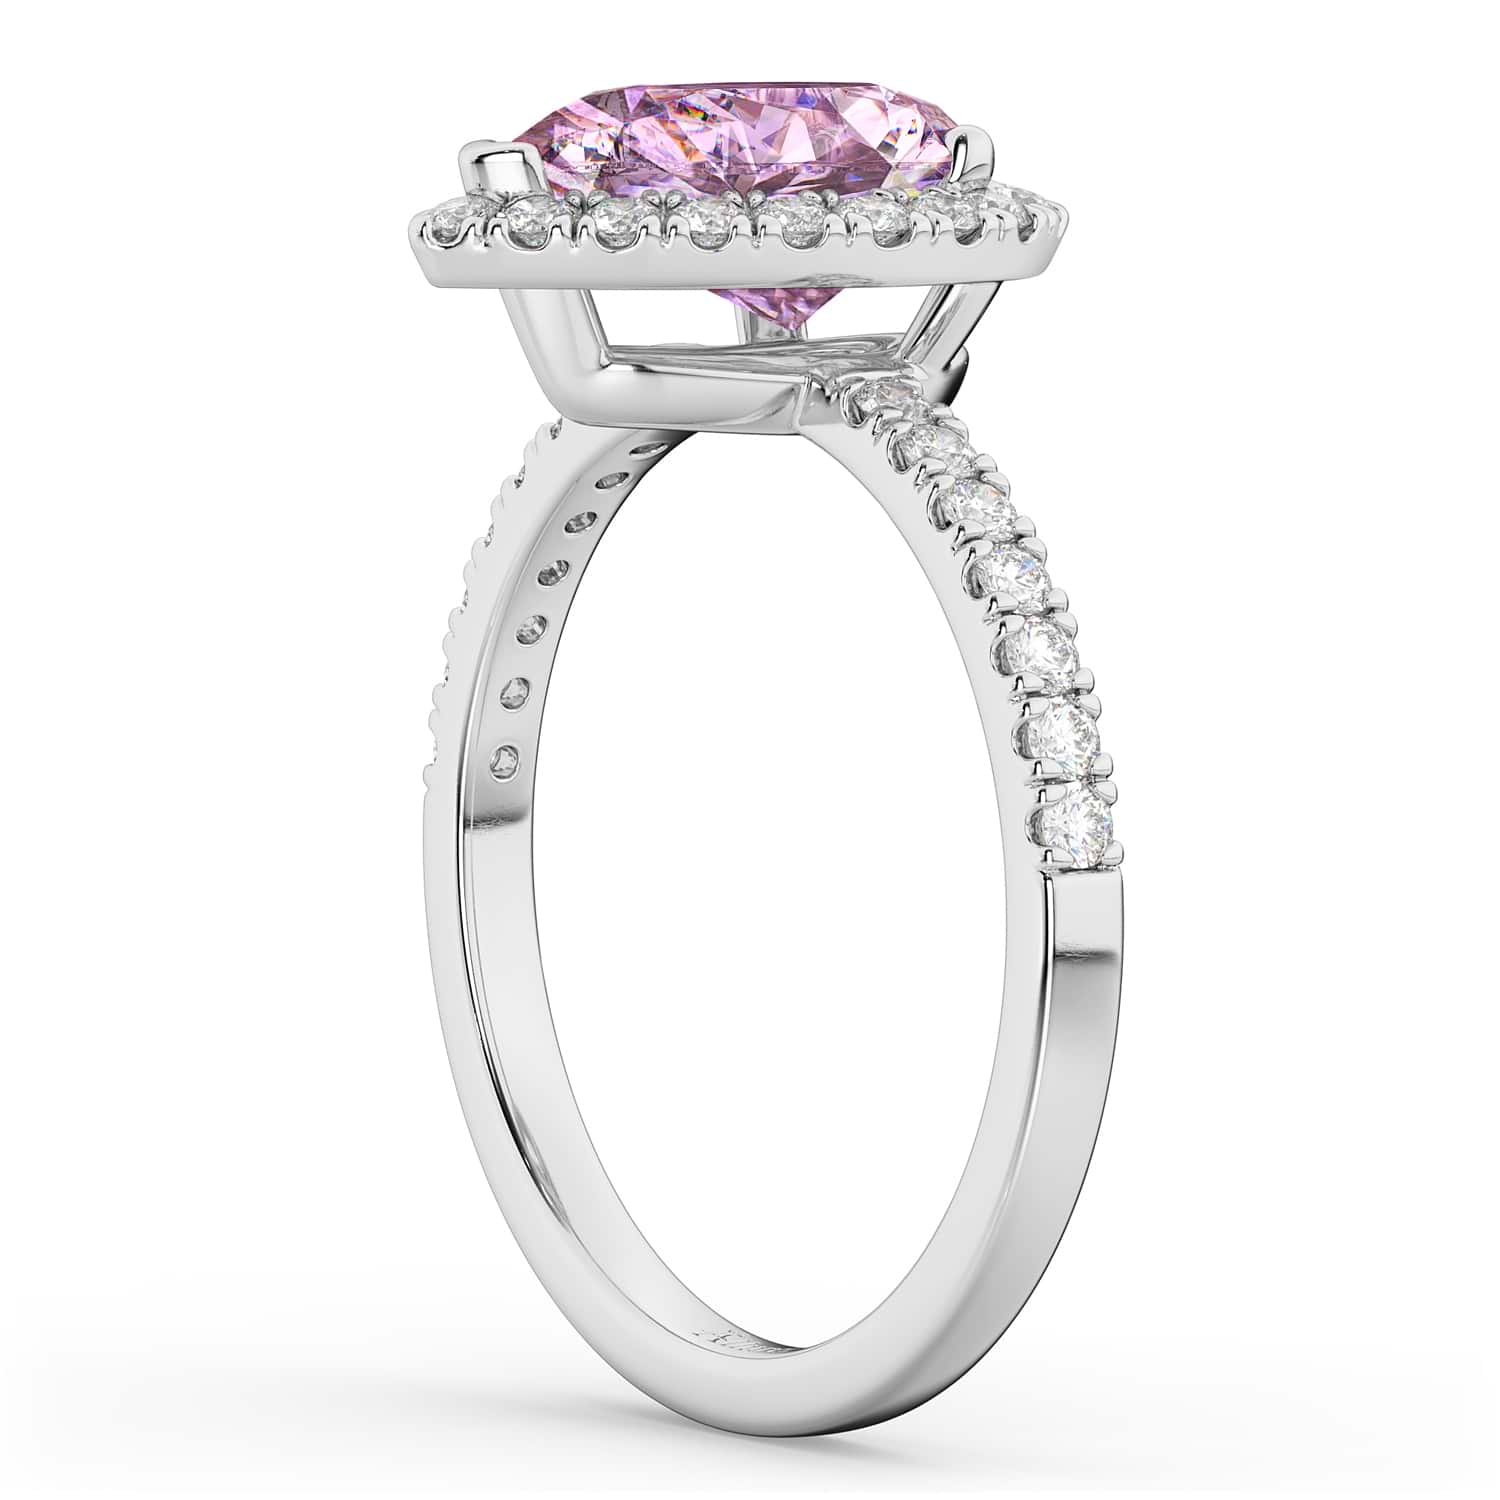 Pear Cut Halo Pink Moissanite & Diamond Engagement Ring 14K White Gold 2.44ct